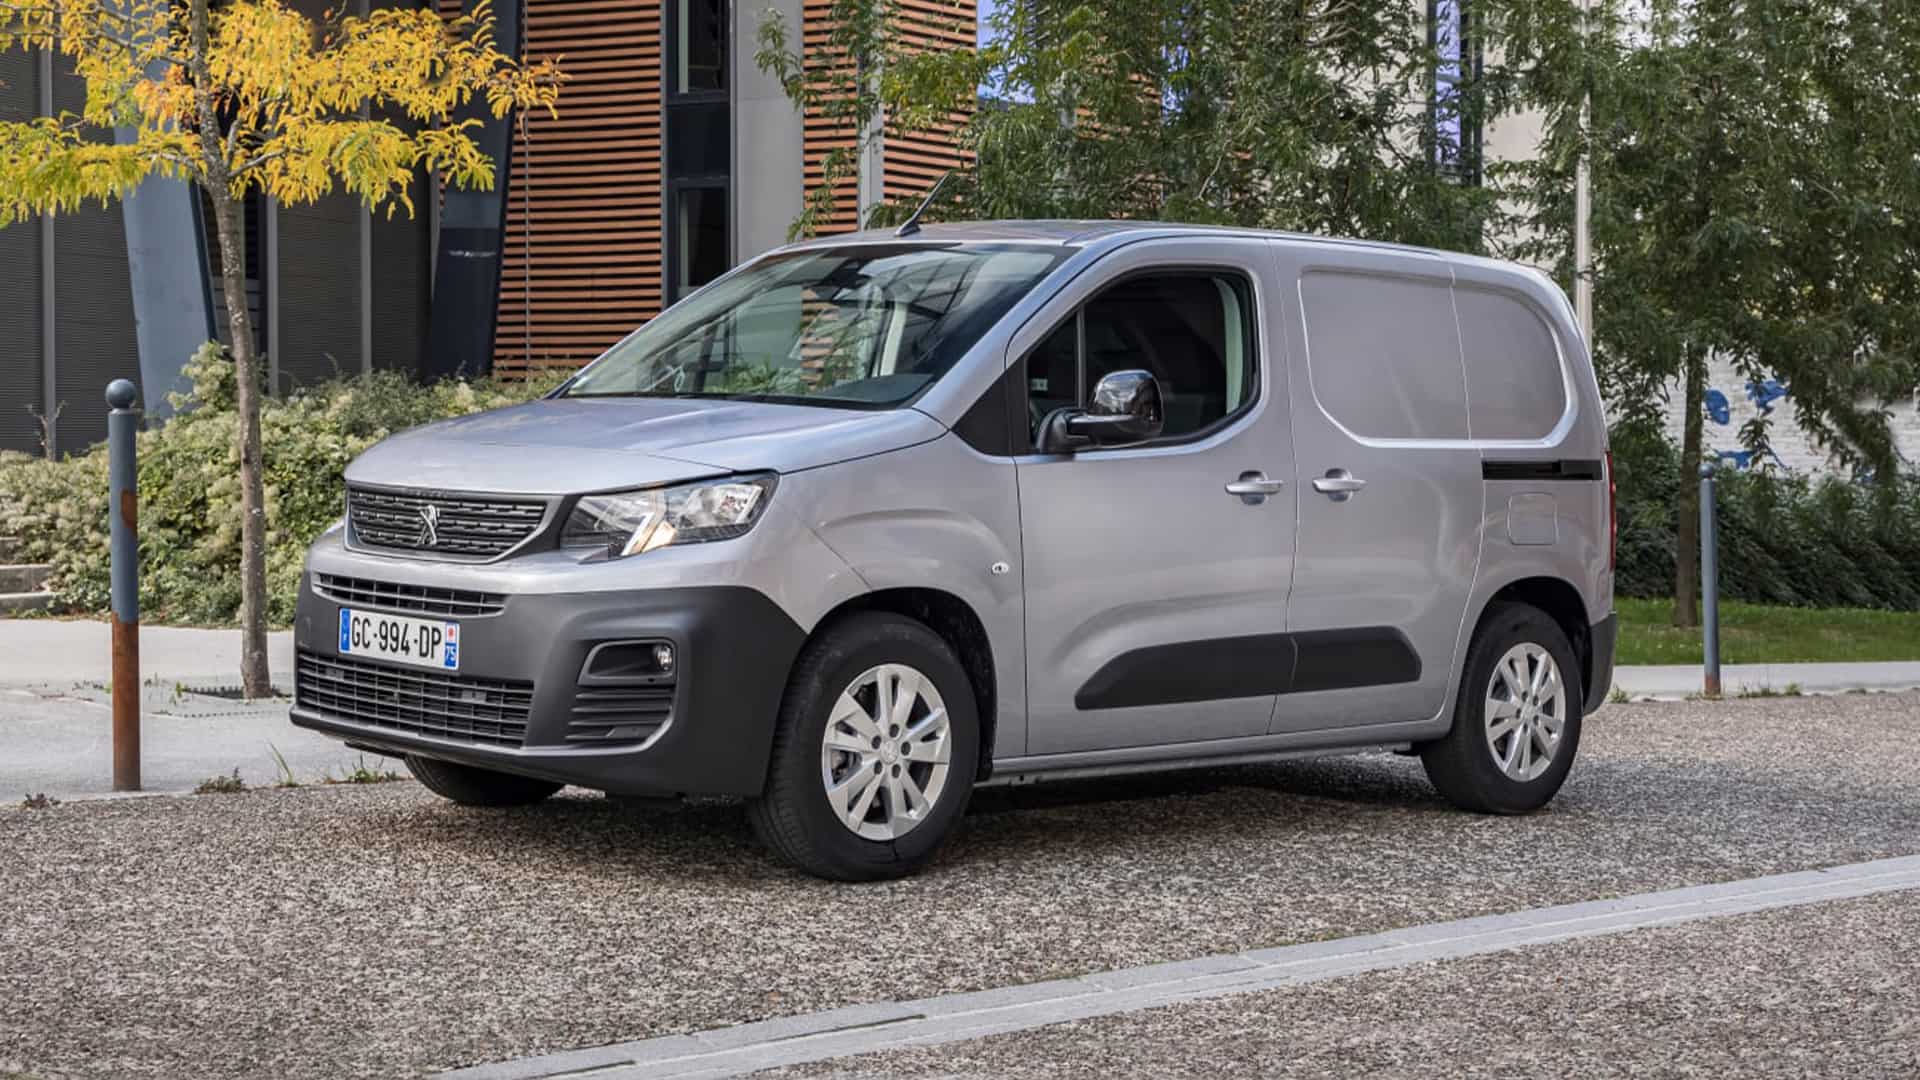 Grey Peugeot e-Partner in gravel parking lot in front of building